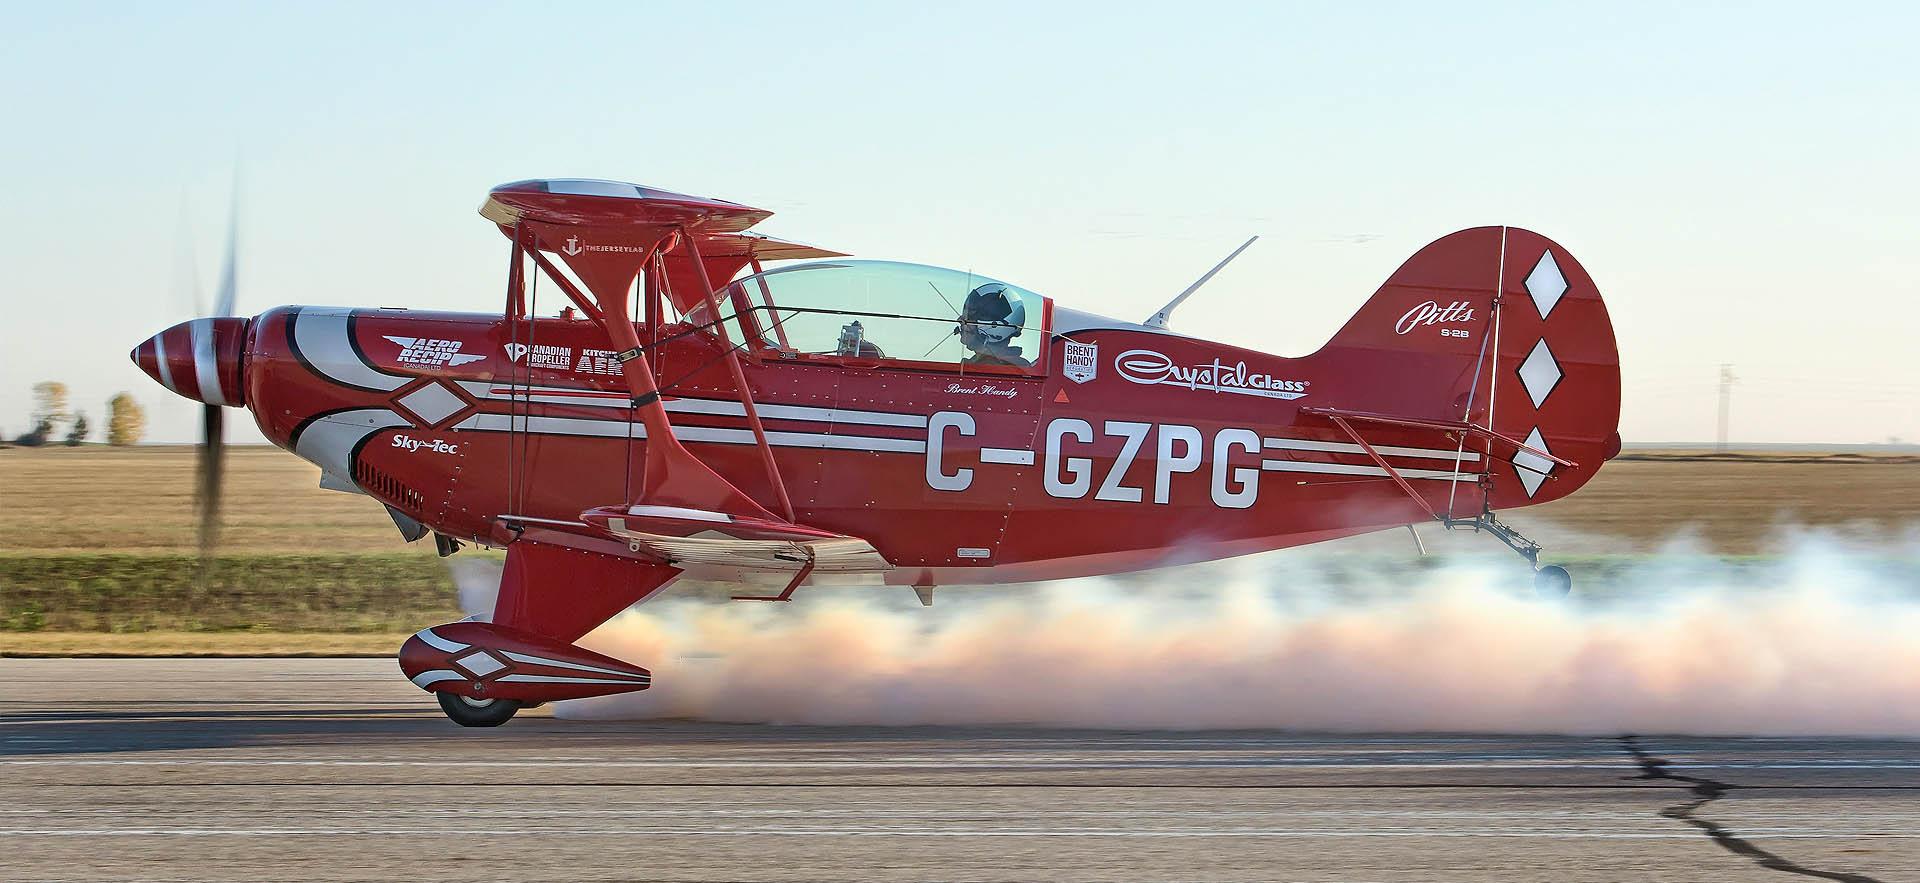 Acrobatic plane smoking on runway